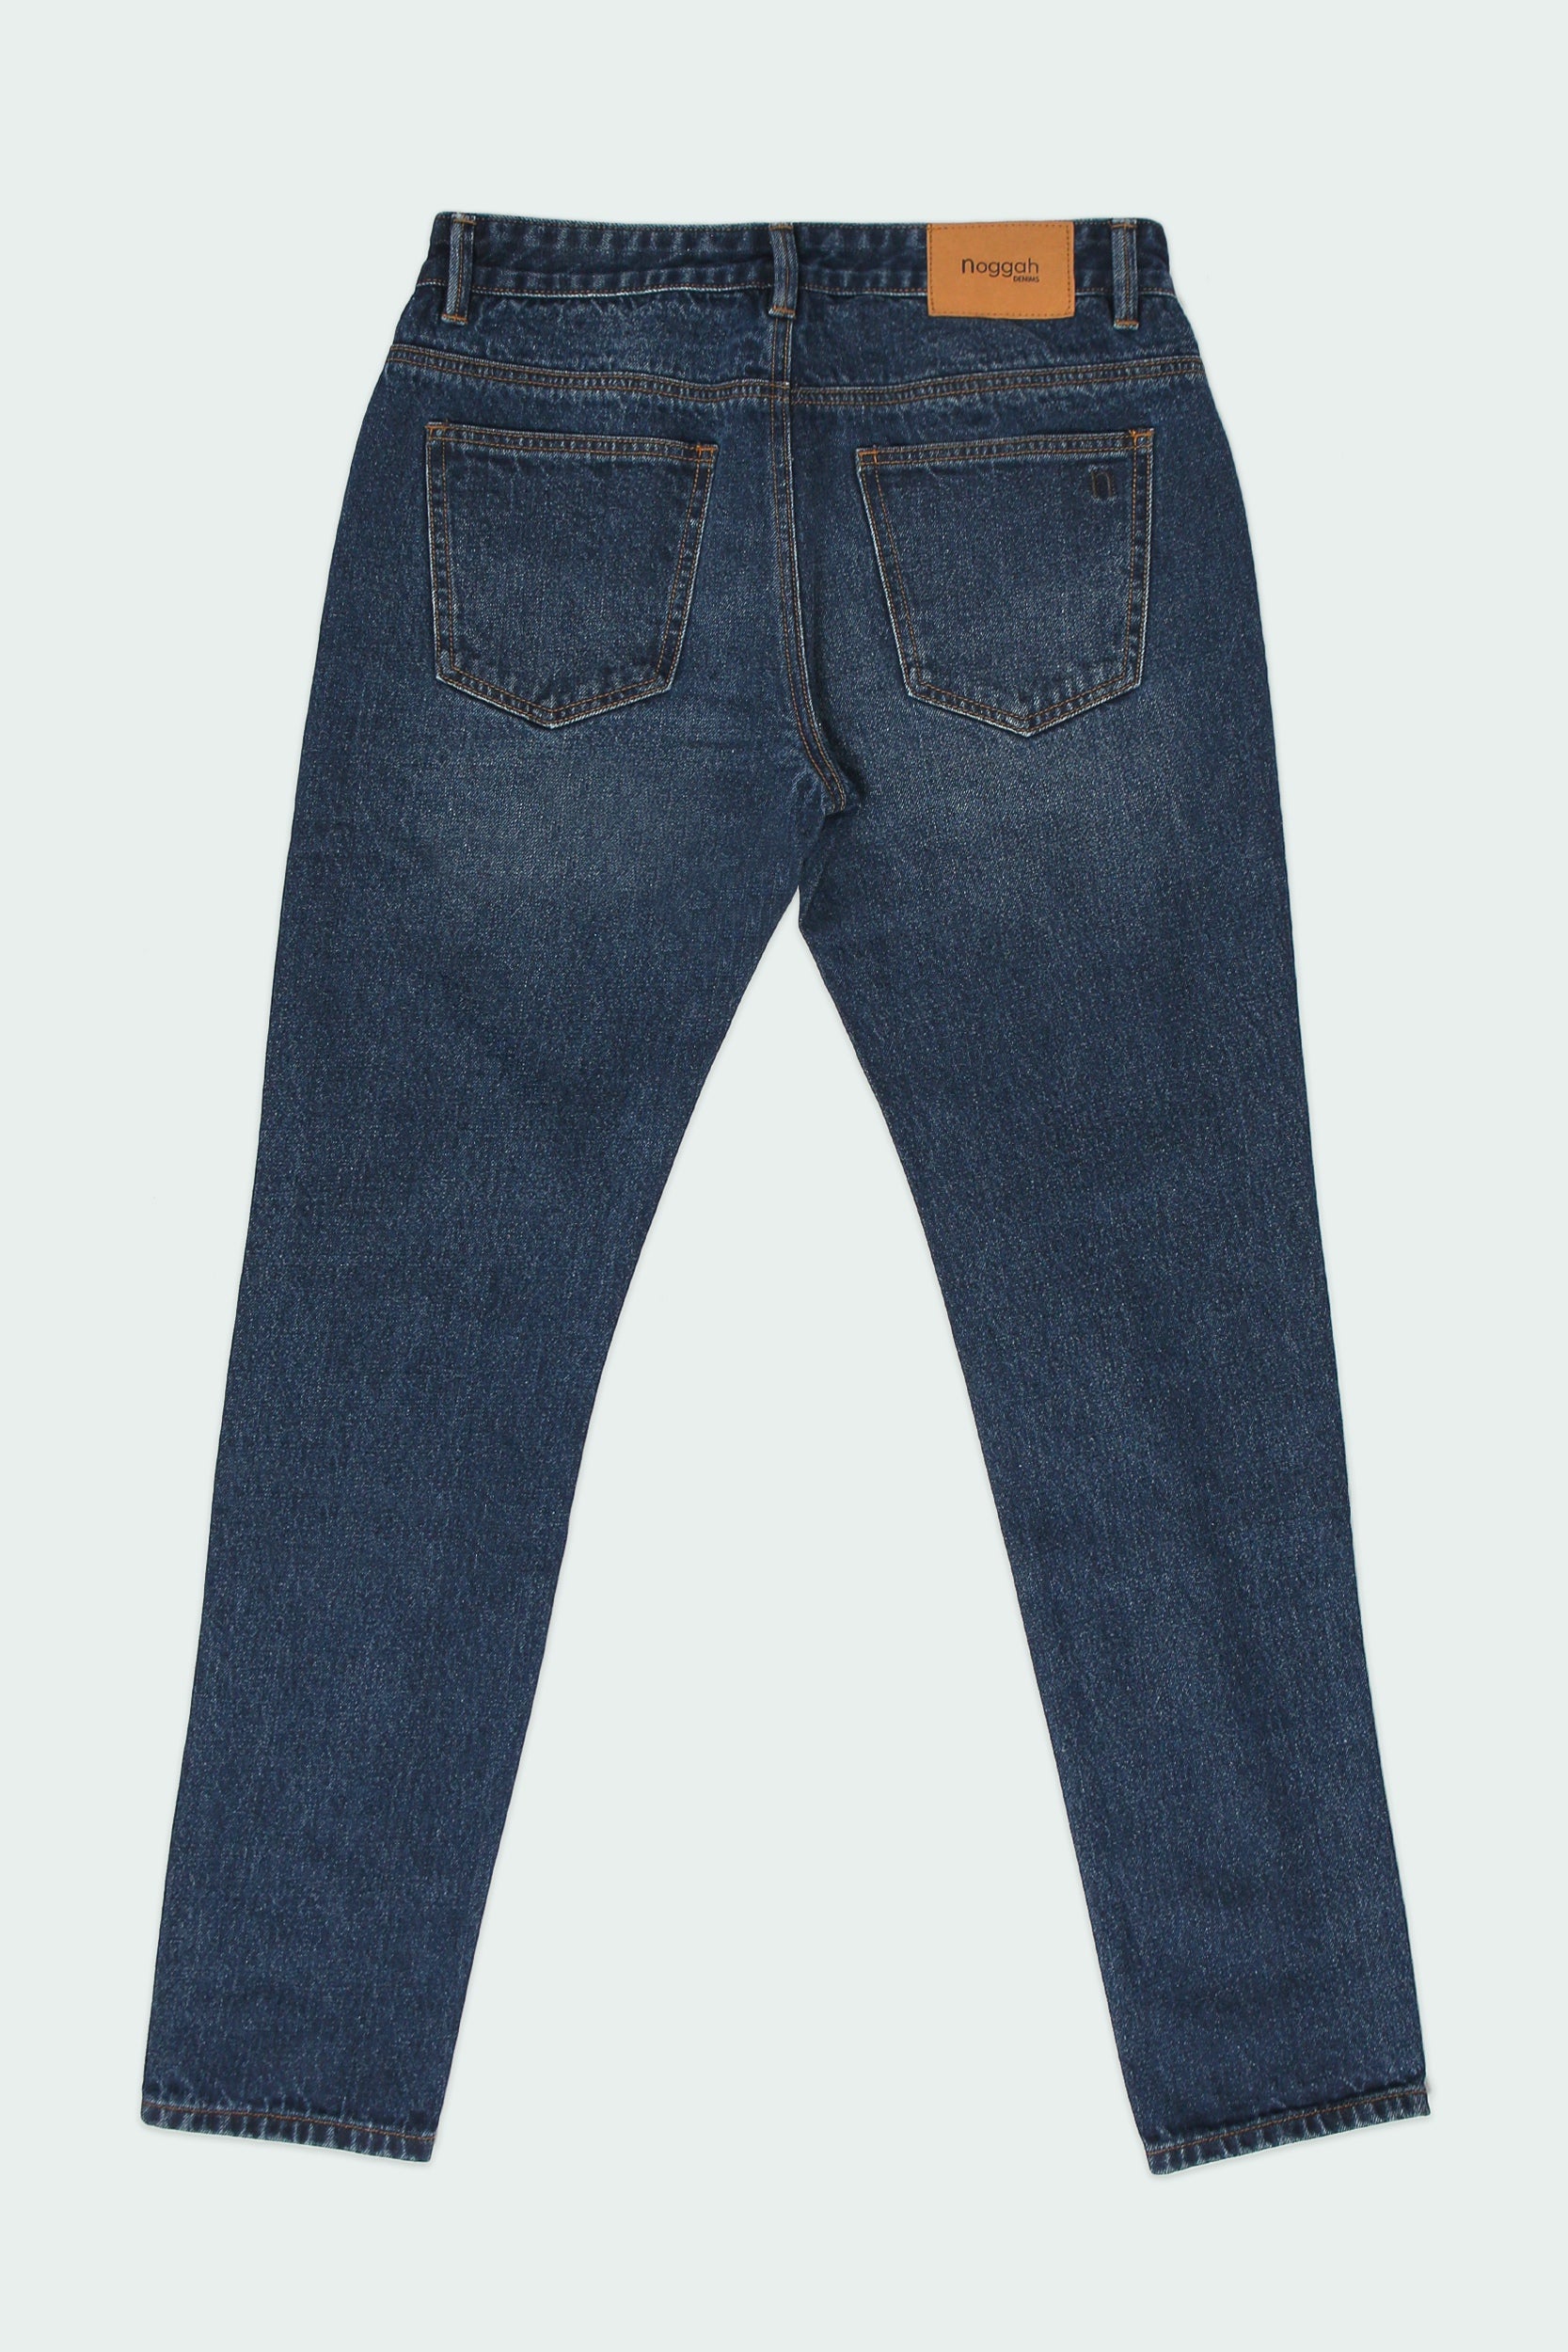 Men's Jeans Regular Fit Navy Blue Bolf R900